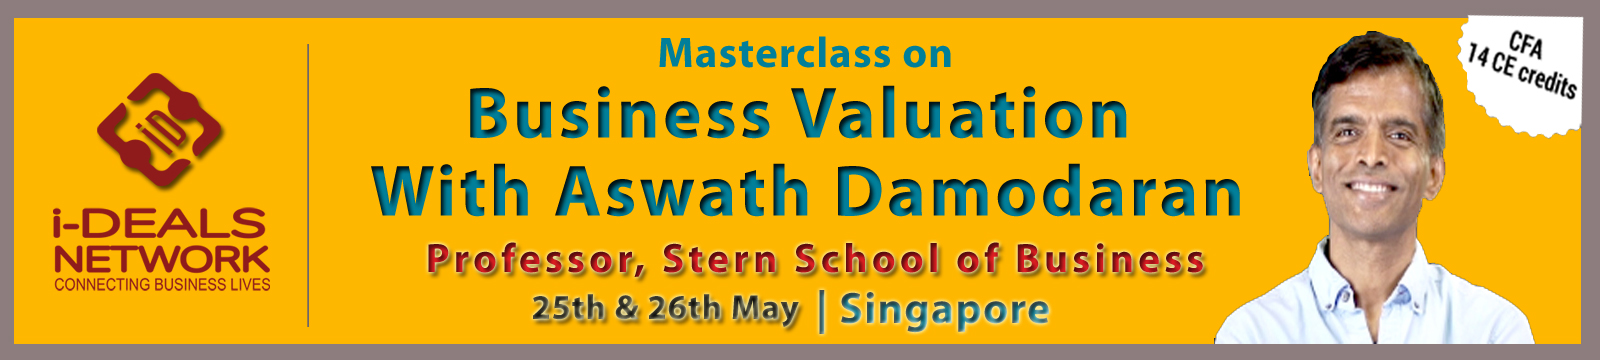 Masterclass on Business Valuation with Aswath Damodaran: 25-26th May'17, Singapore